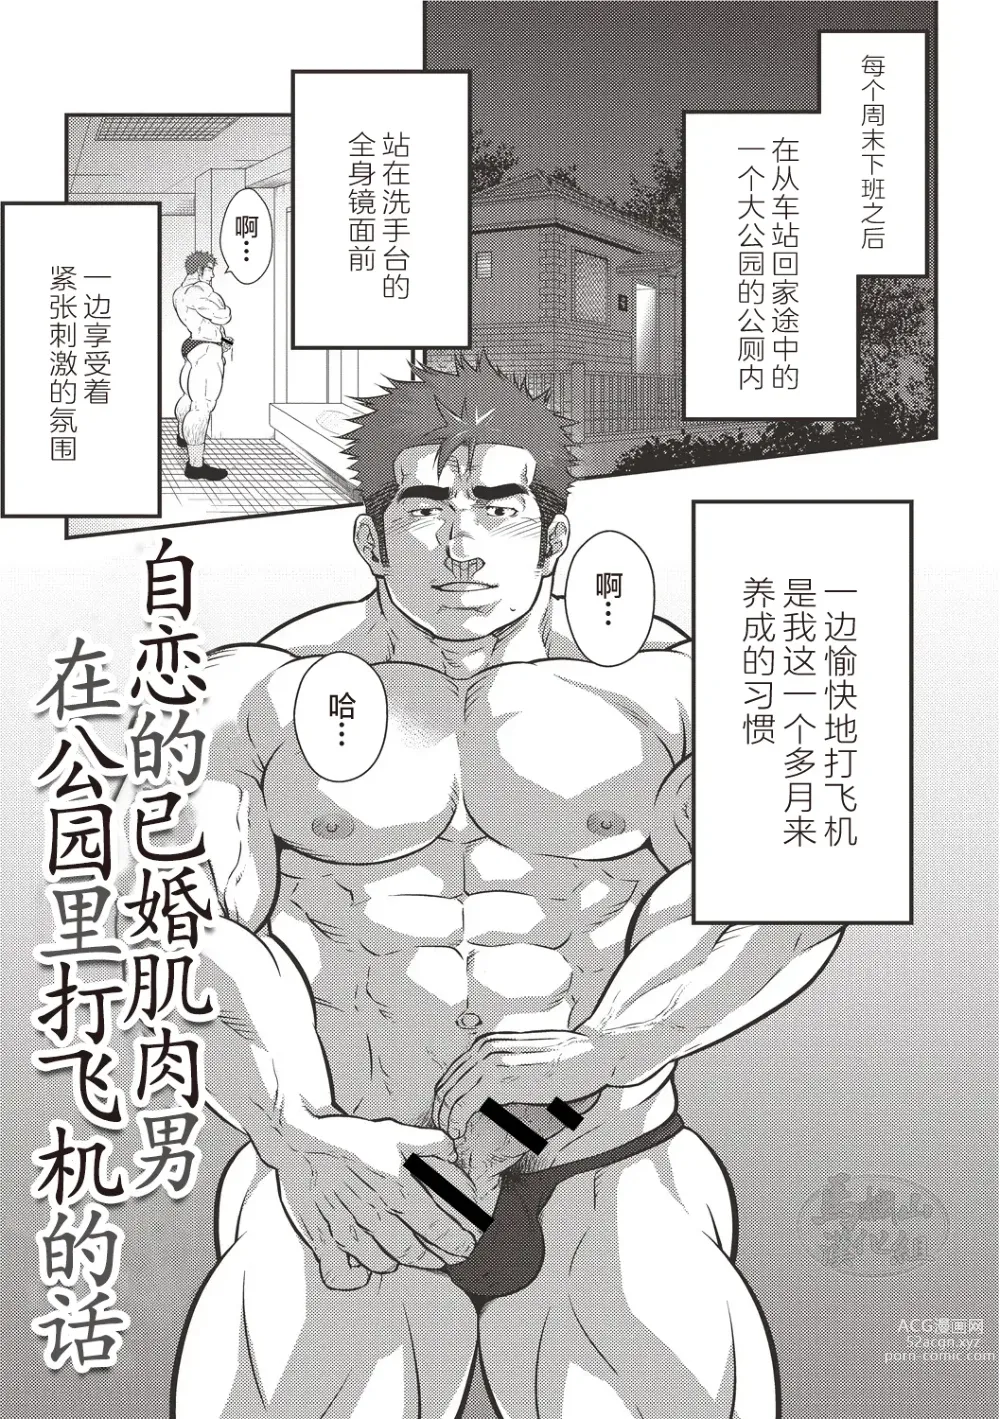 Page 2 of manga  激情男児!! 06 自恋的已婚肌肉男在公园里打飞机的话 / 梦中捆绑